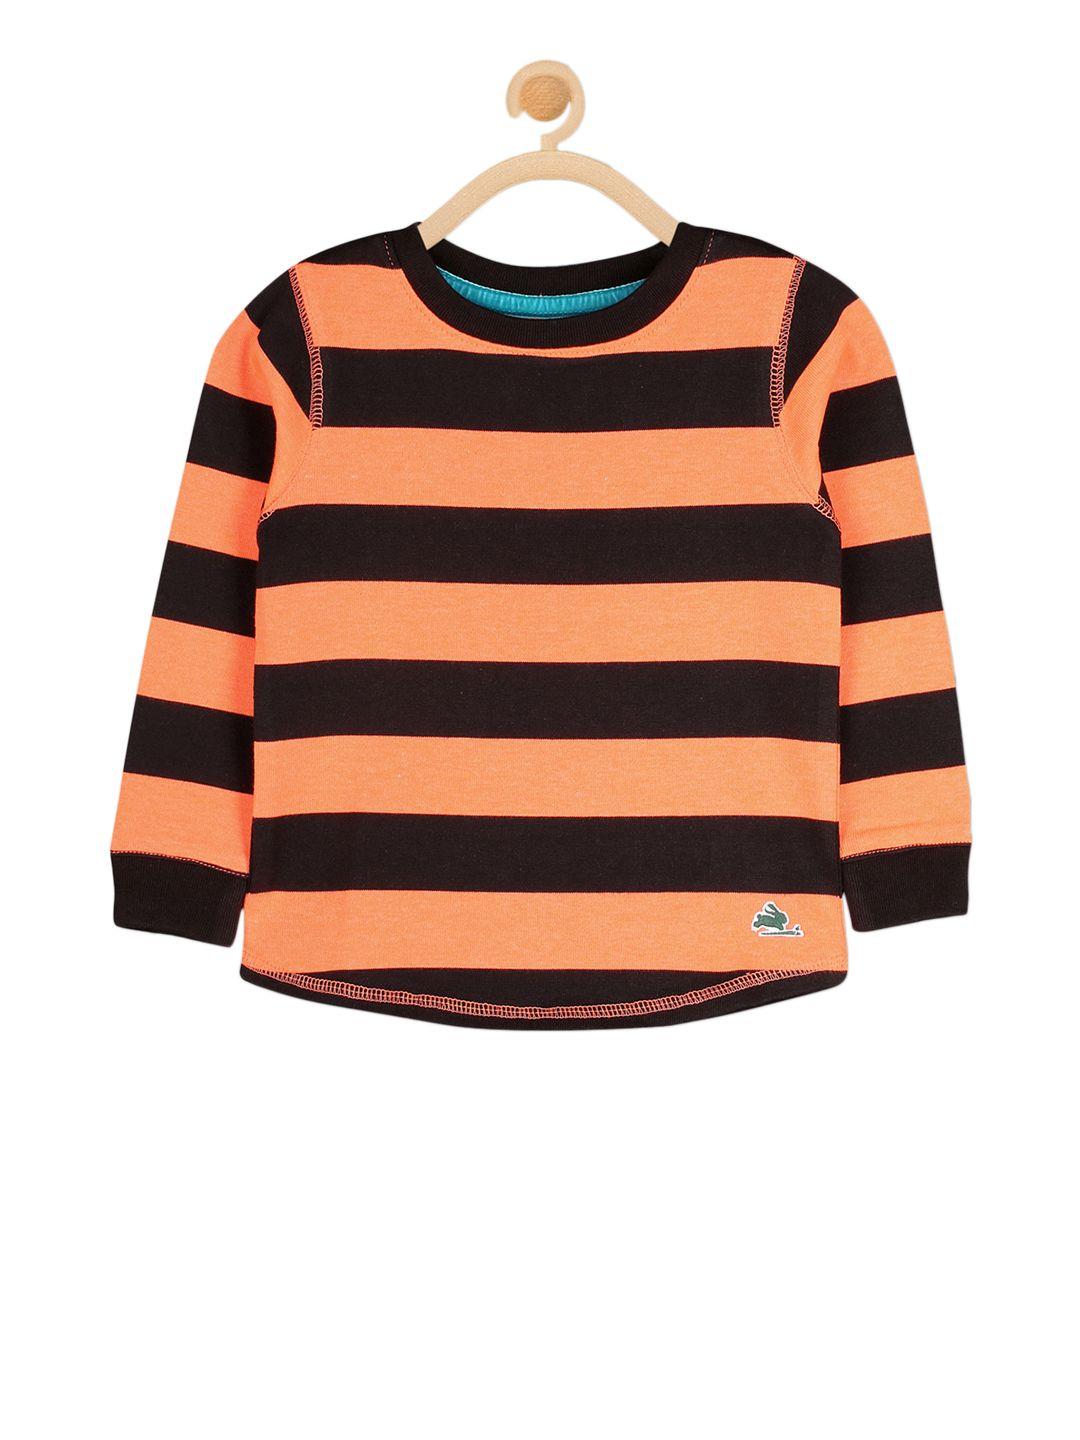 cherry crumble unisex orange & black striped sweatshirt